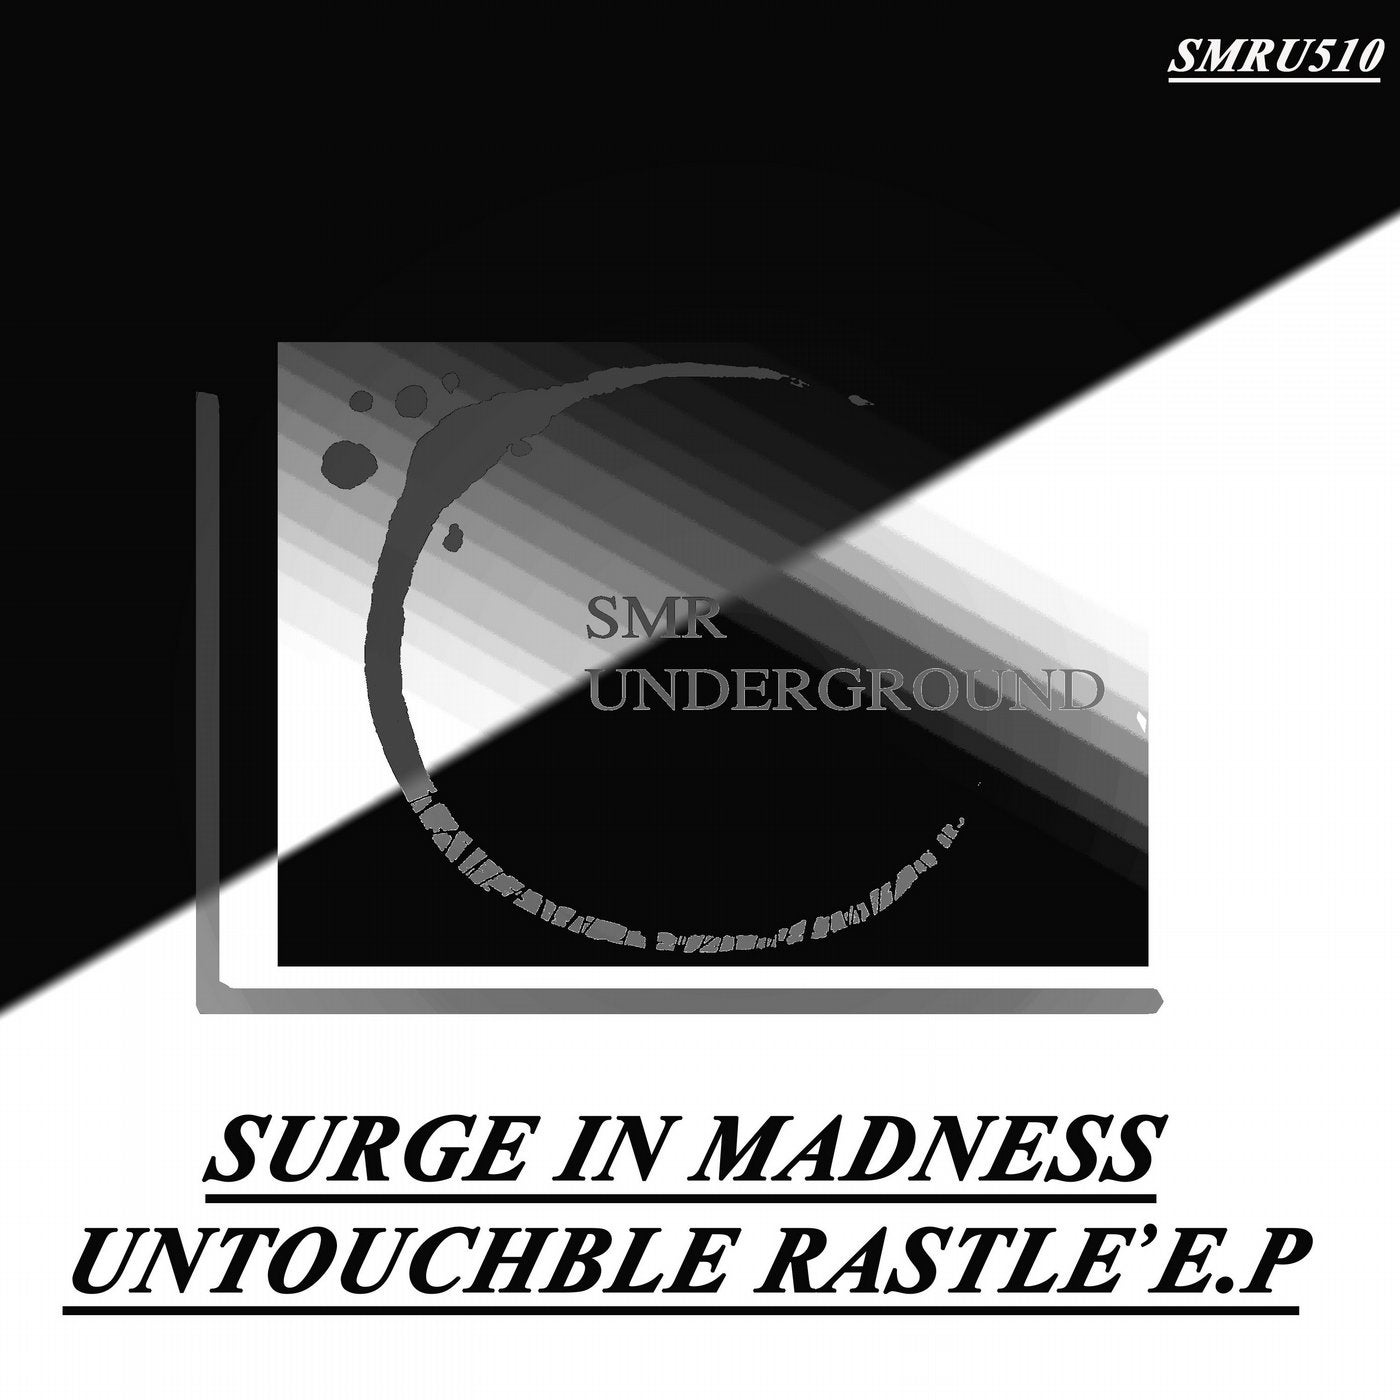 Untouchable Rustle E.P